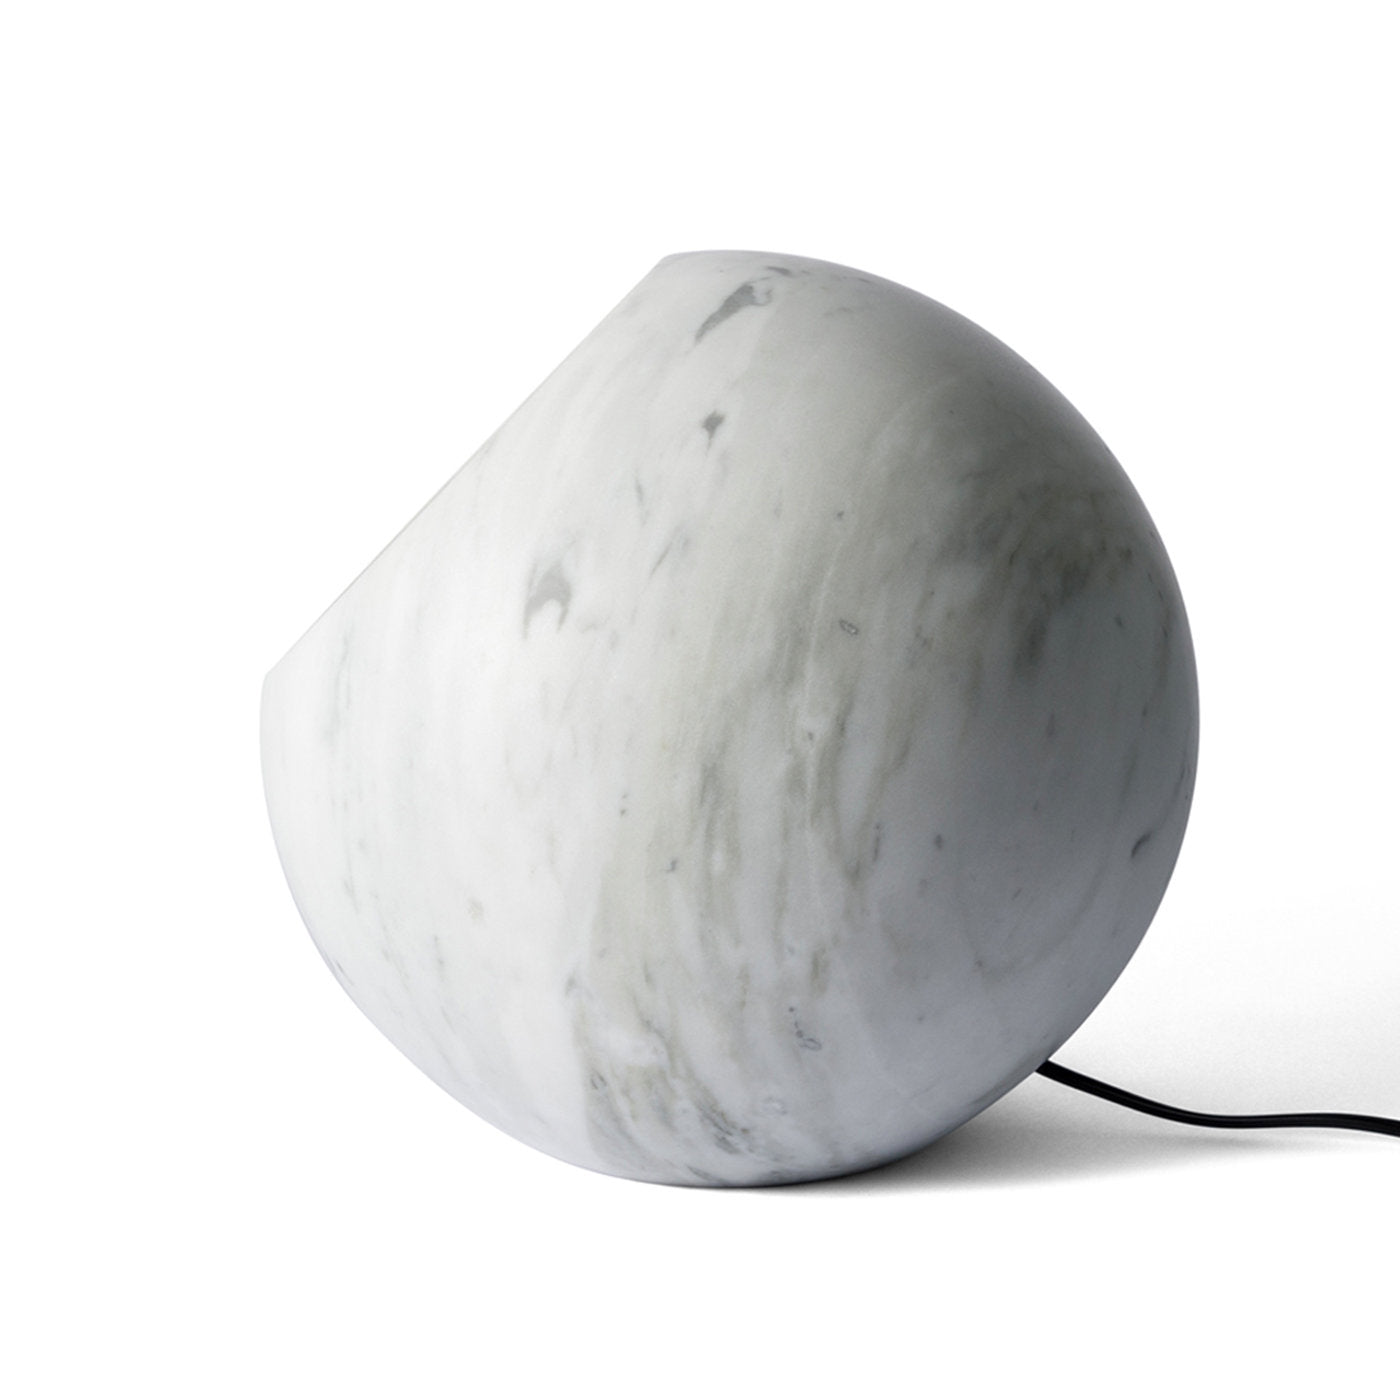 Urano Table Lamp by Elisa Ossino #1 - Alternative view 4